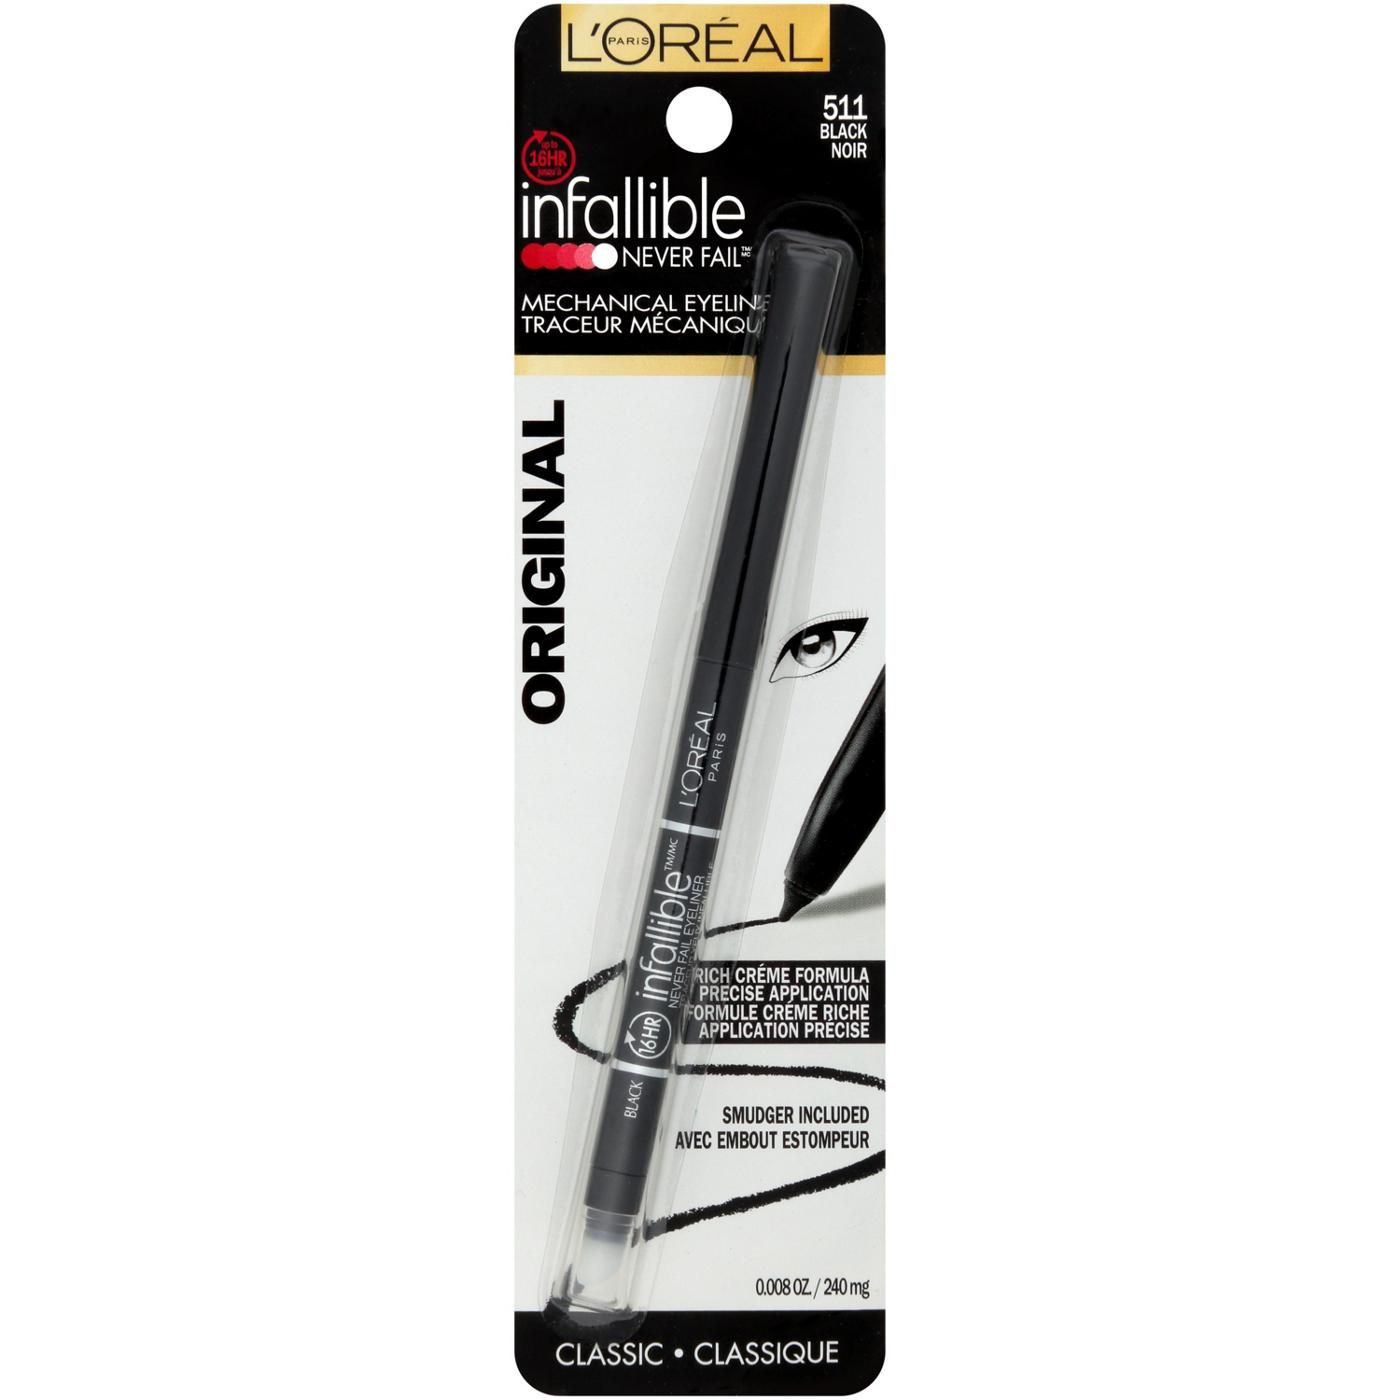 L'Oréal Paris Infallible Never Fail Pencil Eyeliner with Built in Sharpener Black; image 1 of 7